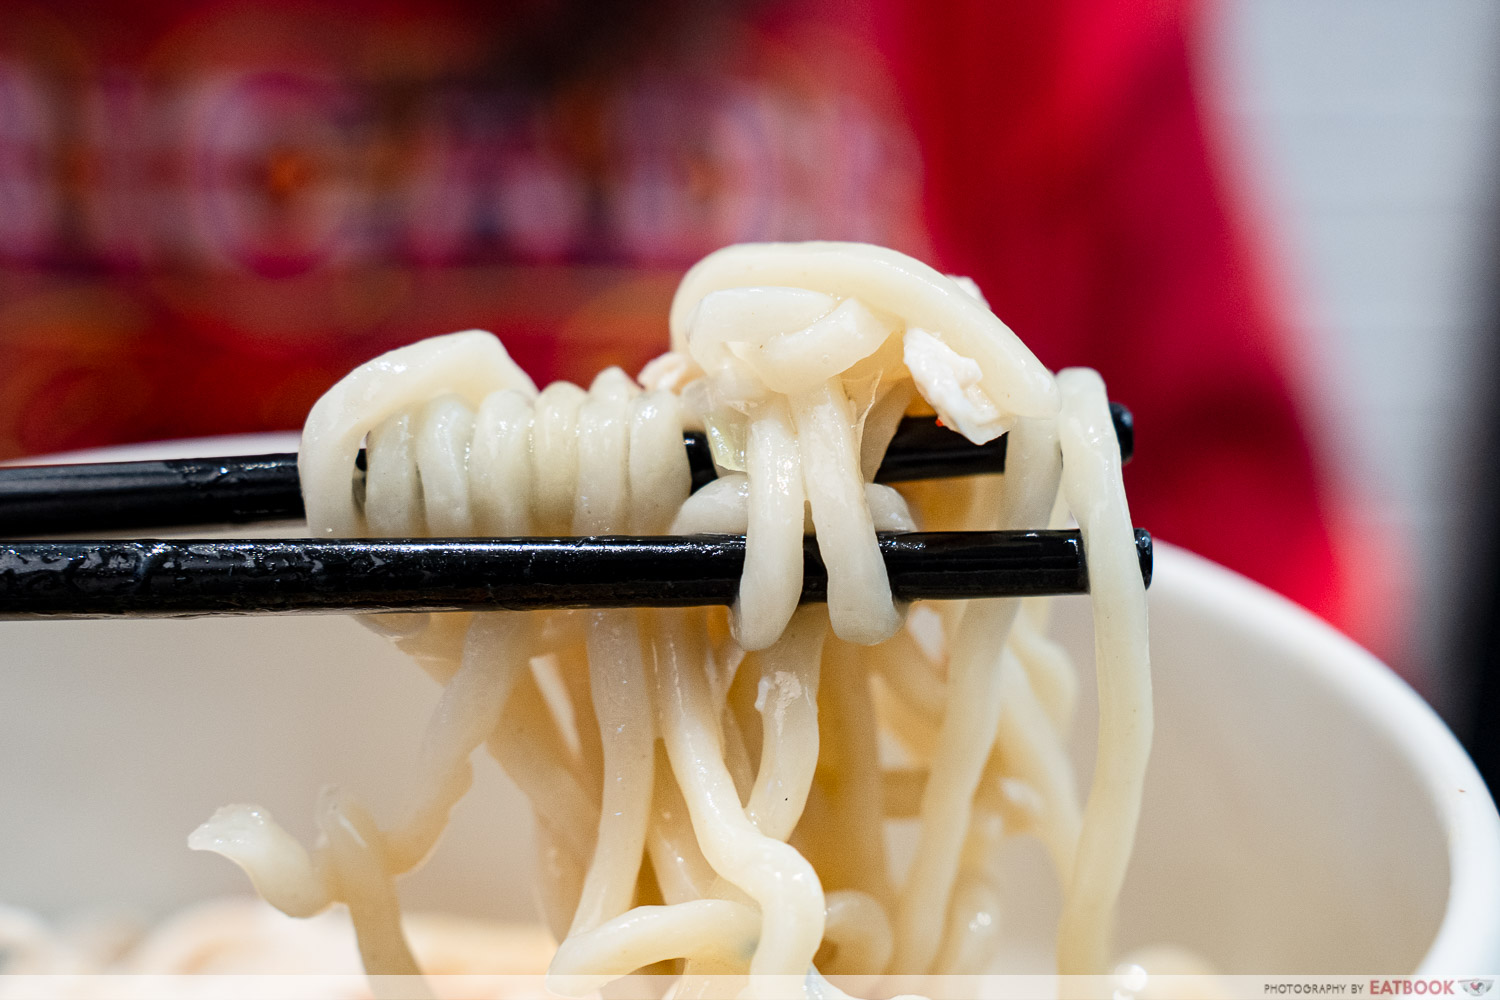 kageyama-interactive-noodles